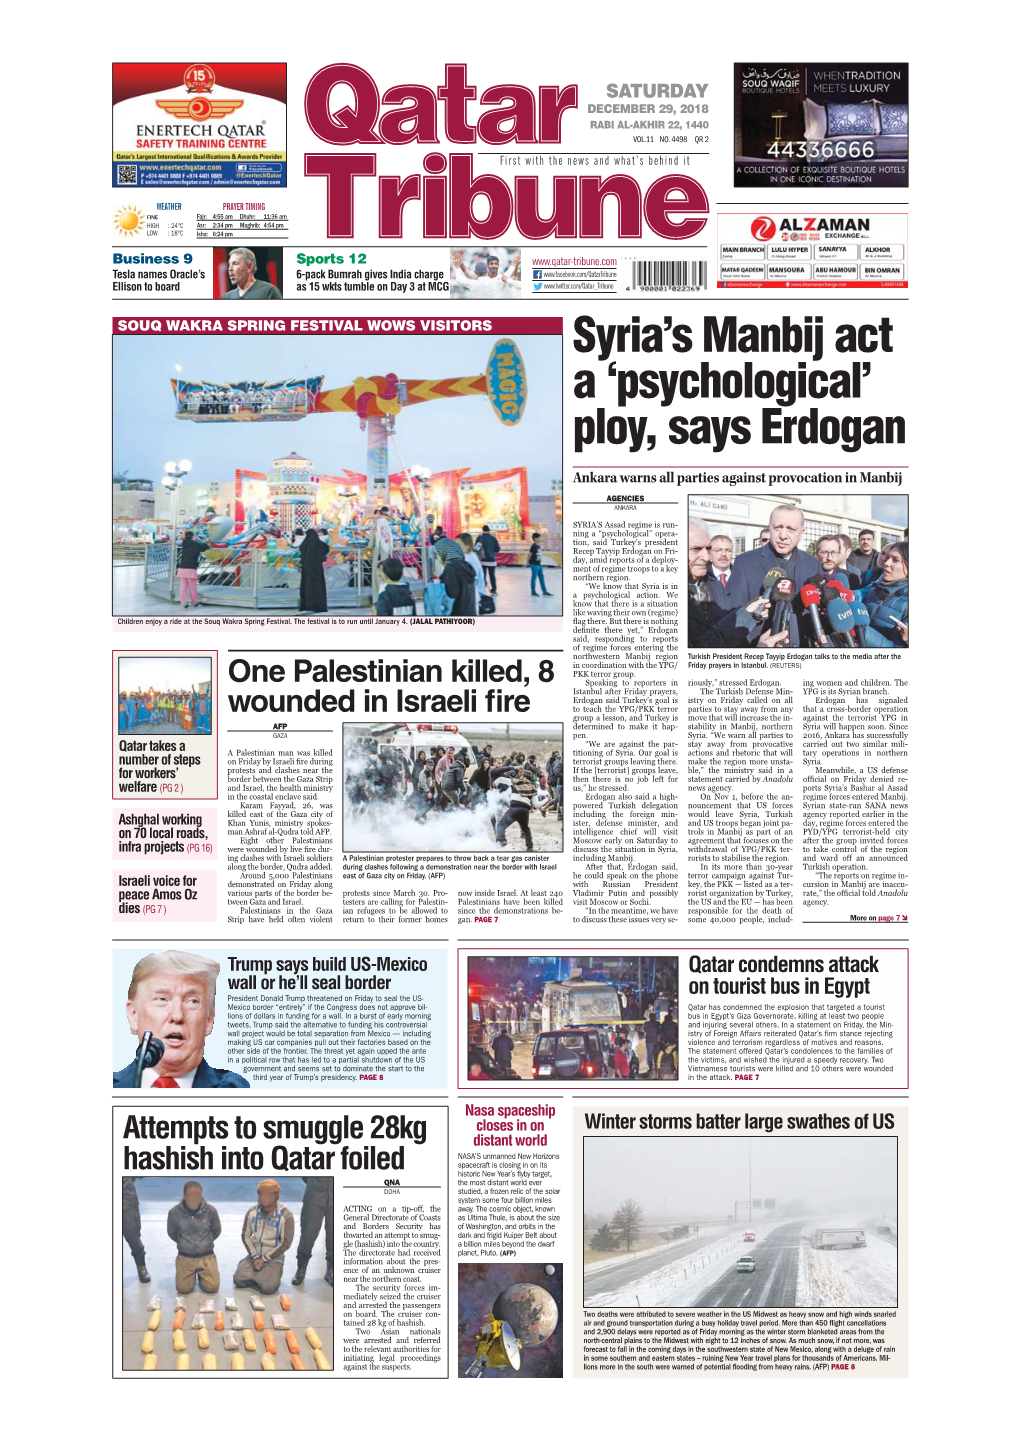 Syria's Manbij Act a 'Psychological' Ploy, Says Erdogan